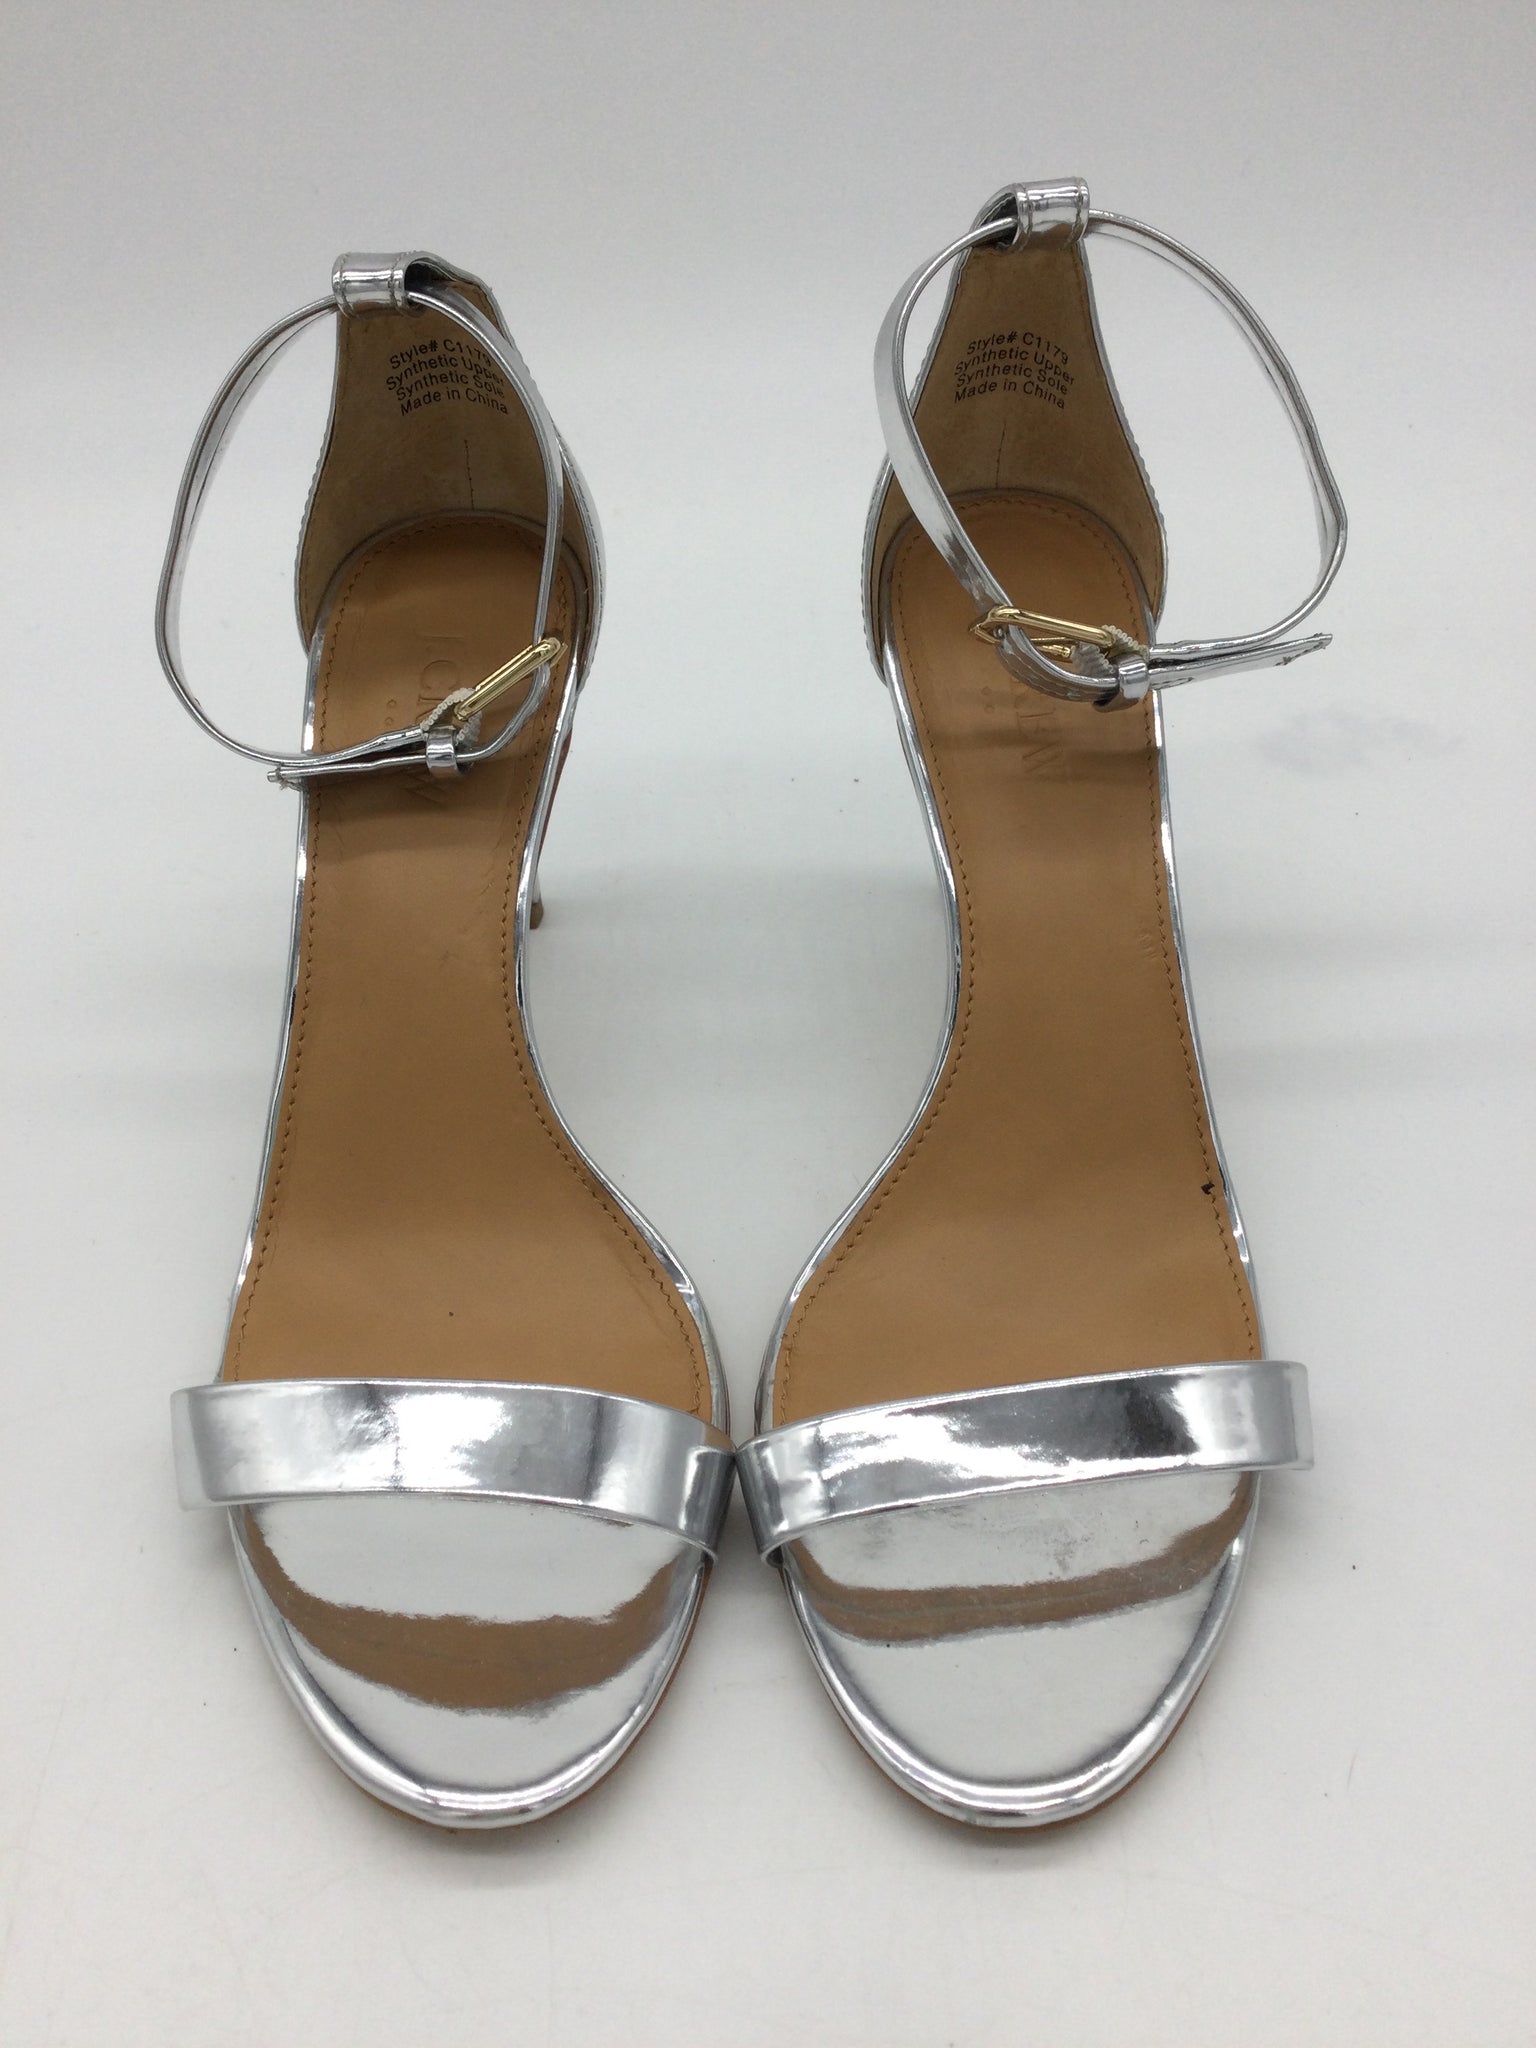 JCREW Size 9 Silver Sandals